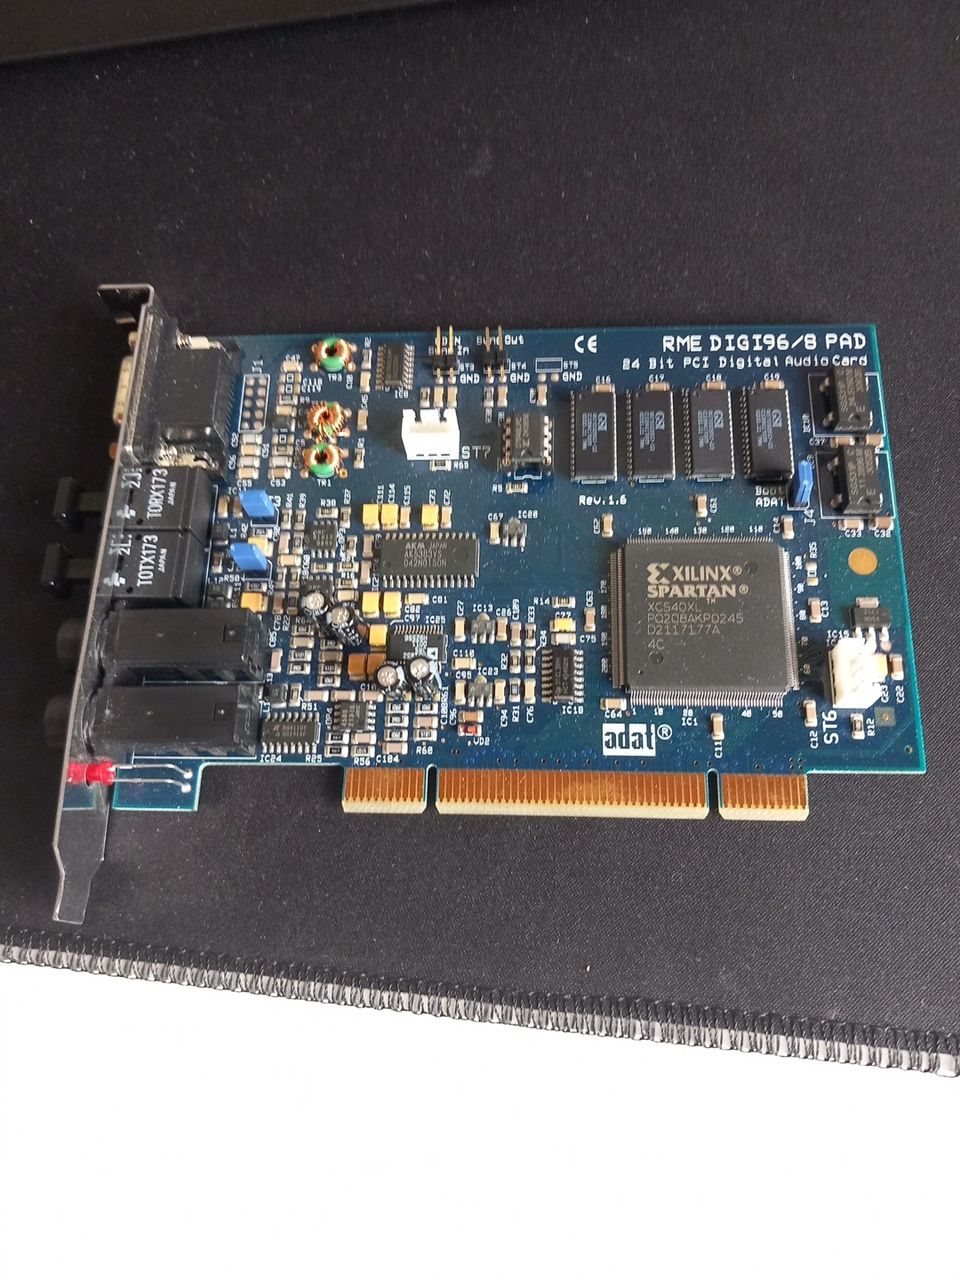 RME DIGI96/8 PAD 24 BIT PCI DIGITAL AUDIO CARD äänikortti